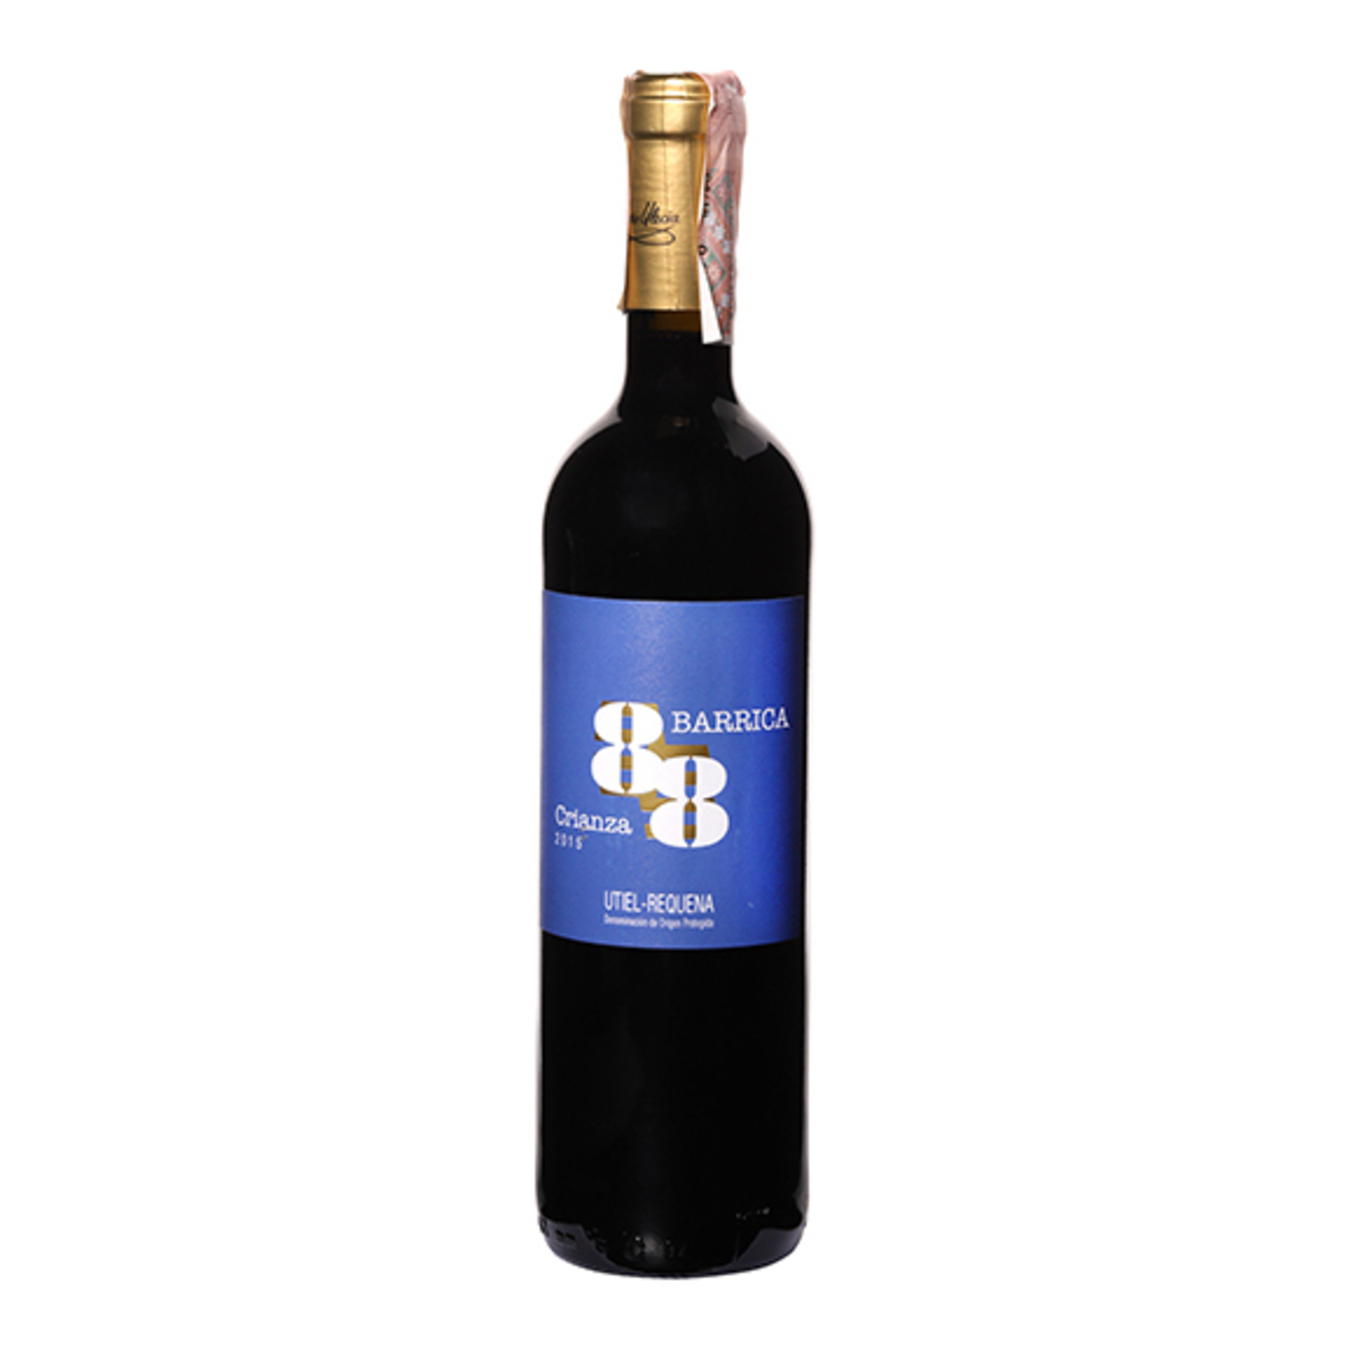 Вино Barrica 88 Crianza do Utiel-Requena красное сухое 13% 0,75л